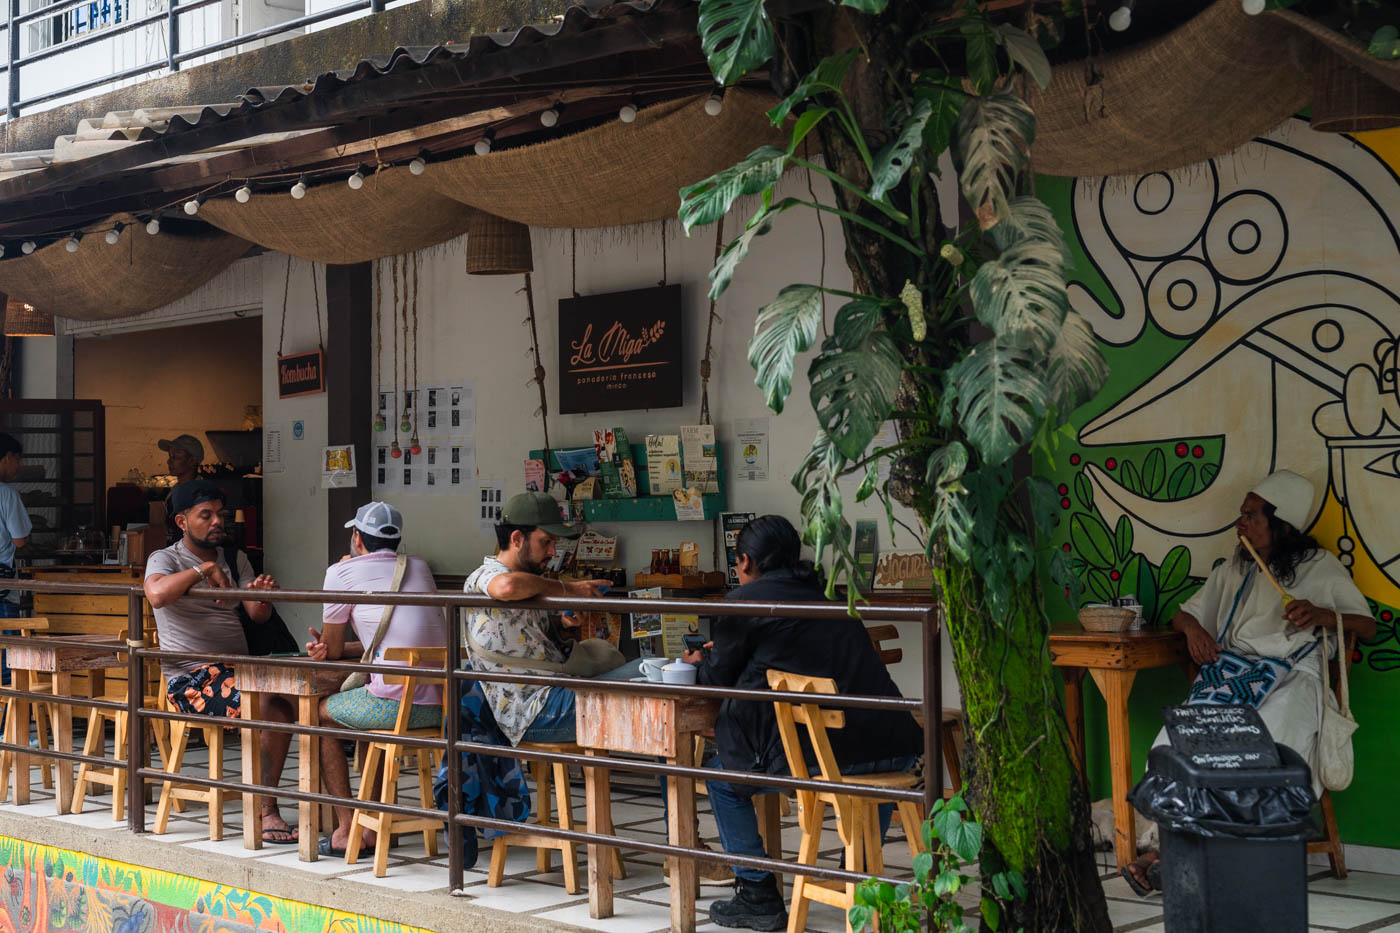 People sitting at the tables on the veranda of the La Miga Panaderia in Minca.